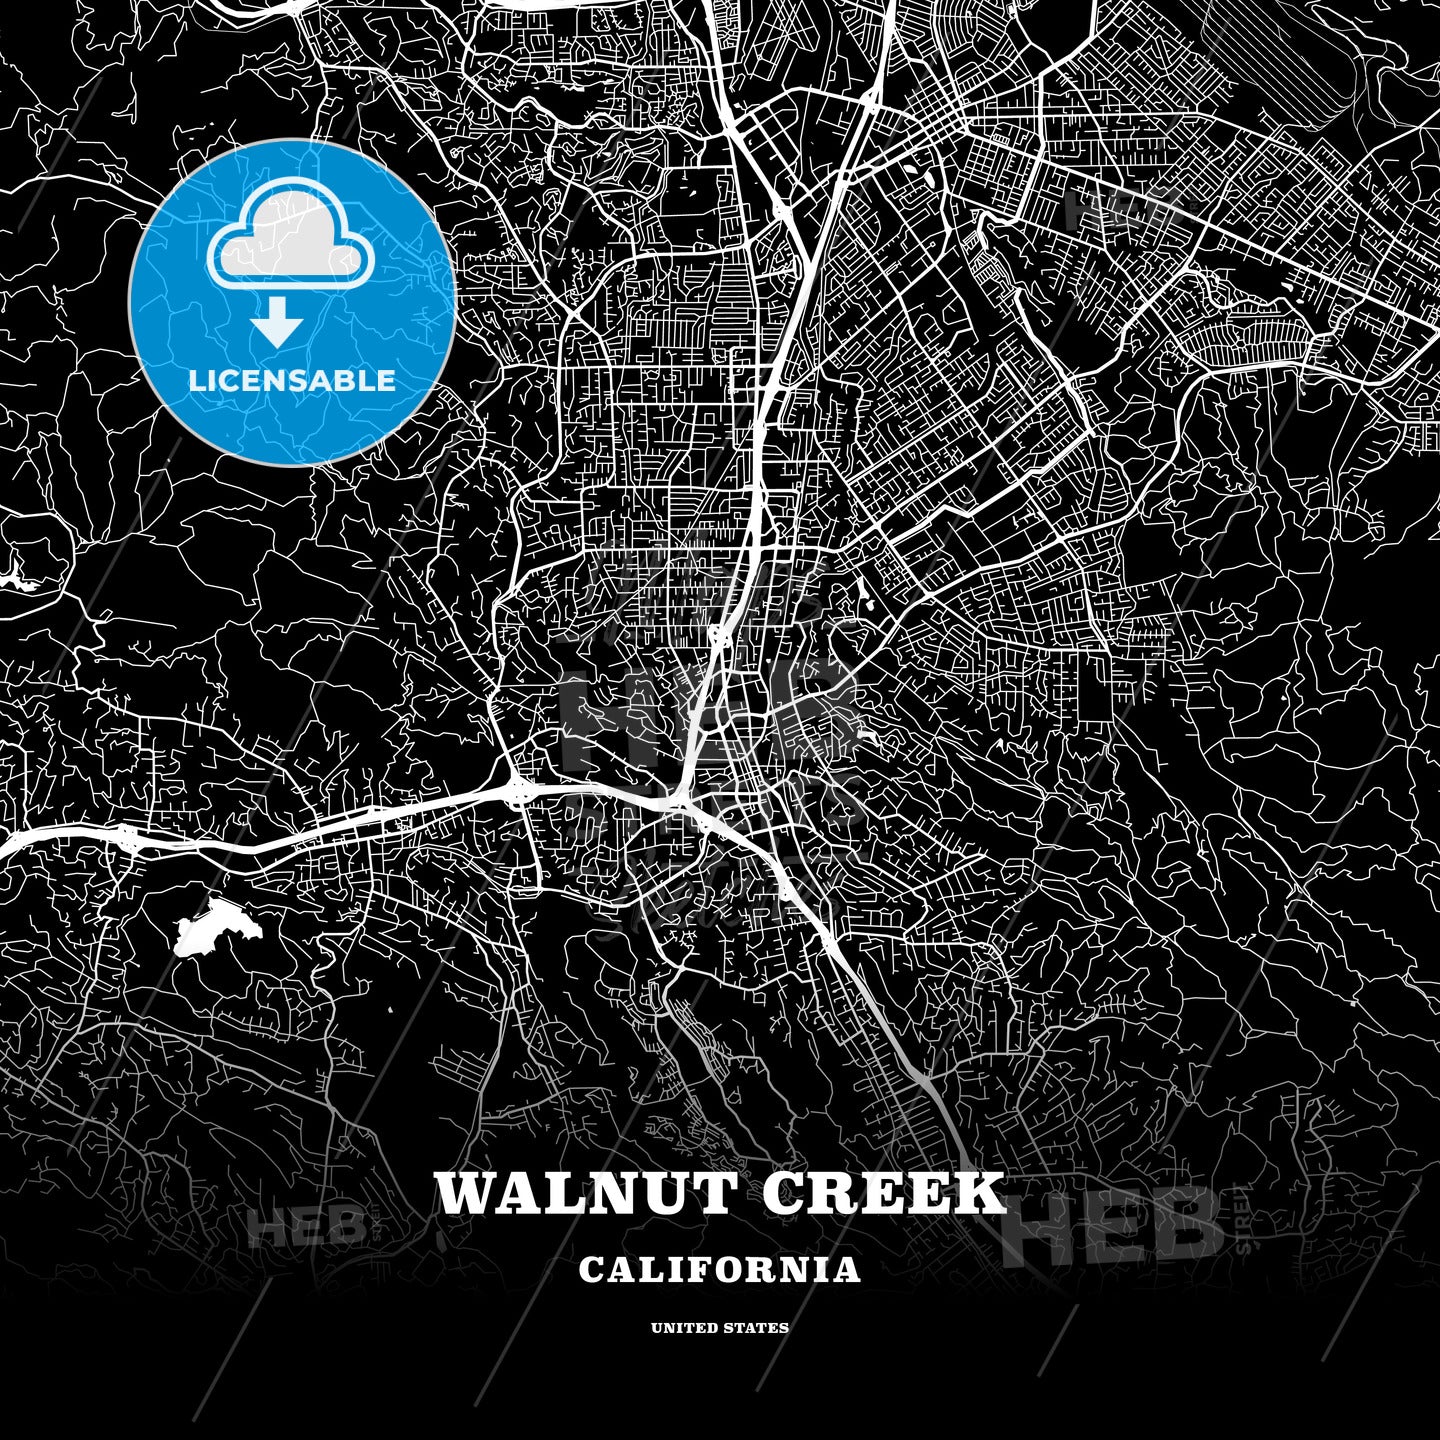 Walnut Creek, California, USA map